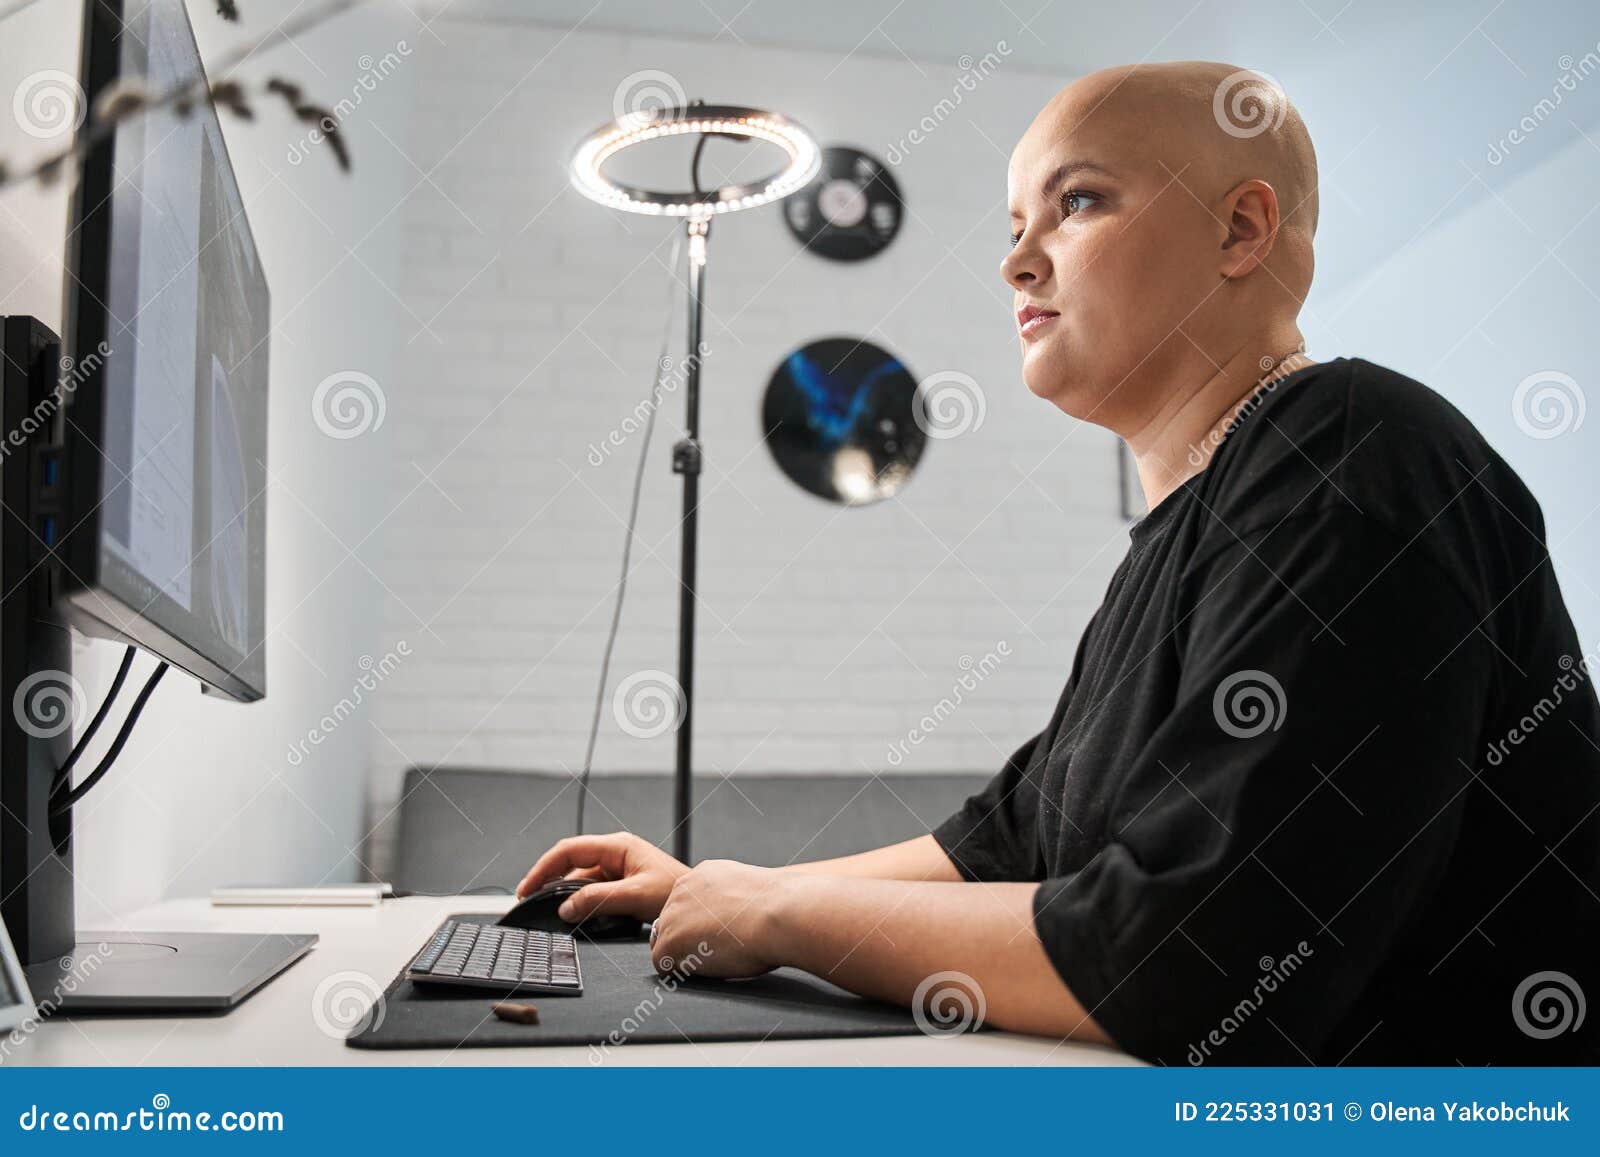 Девушка за компьютером рисунок